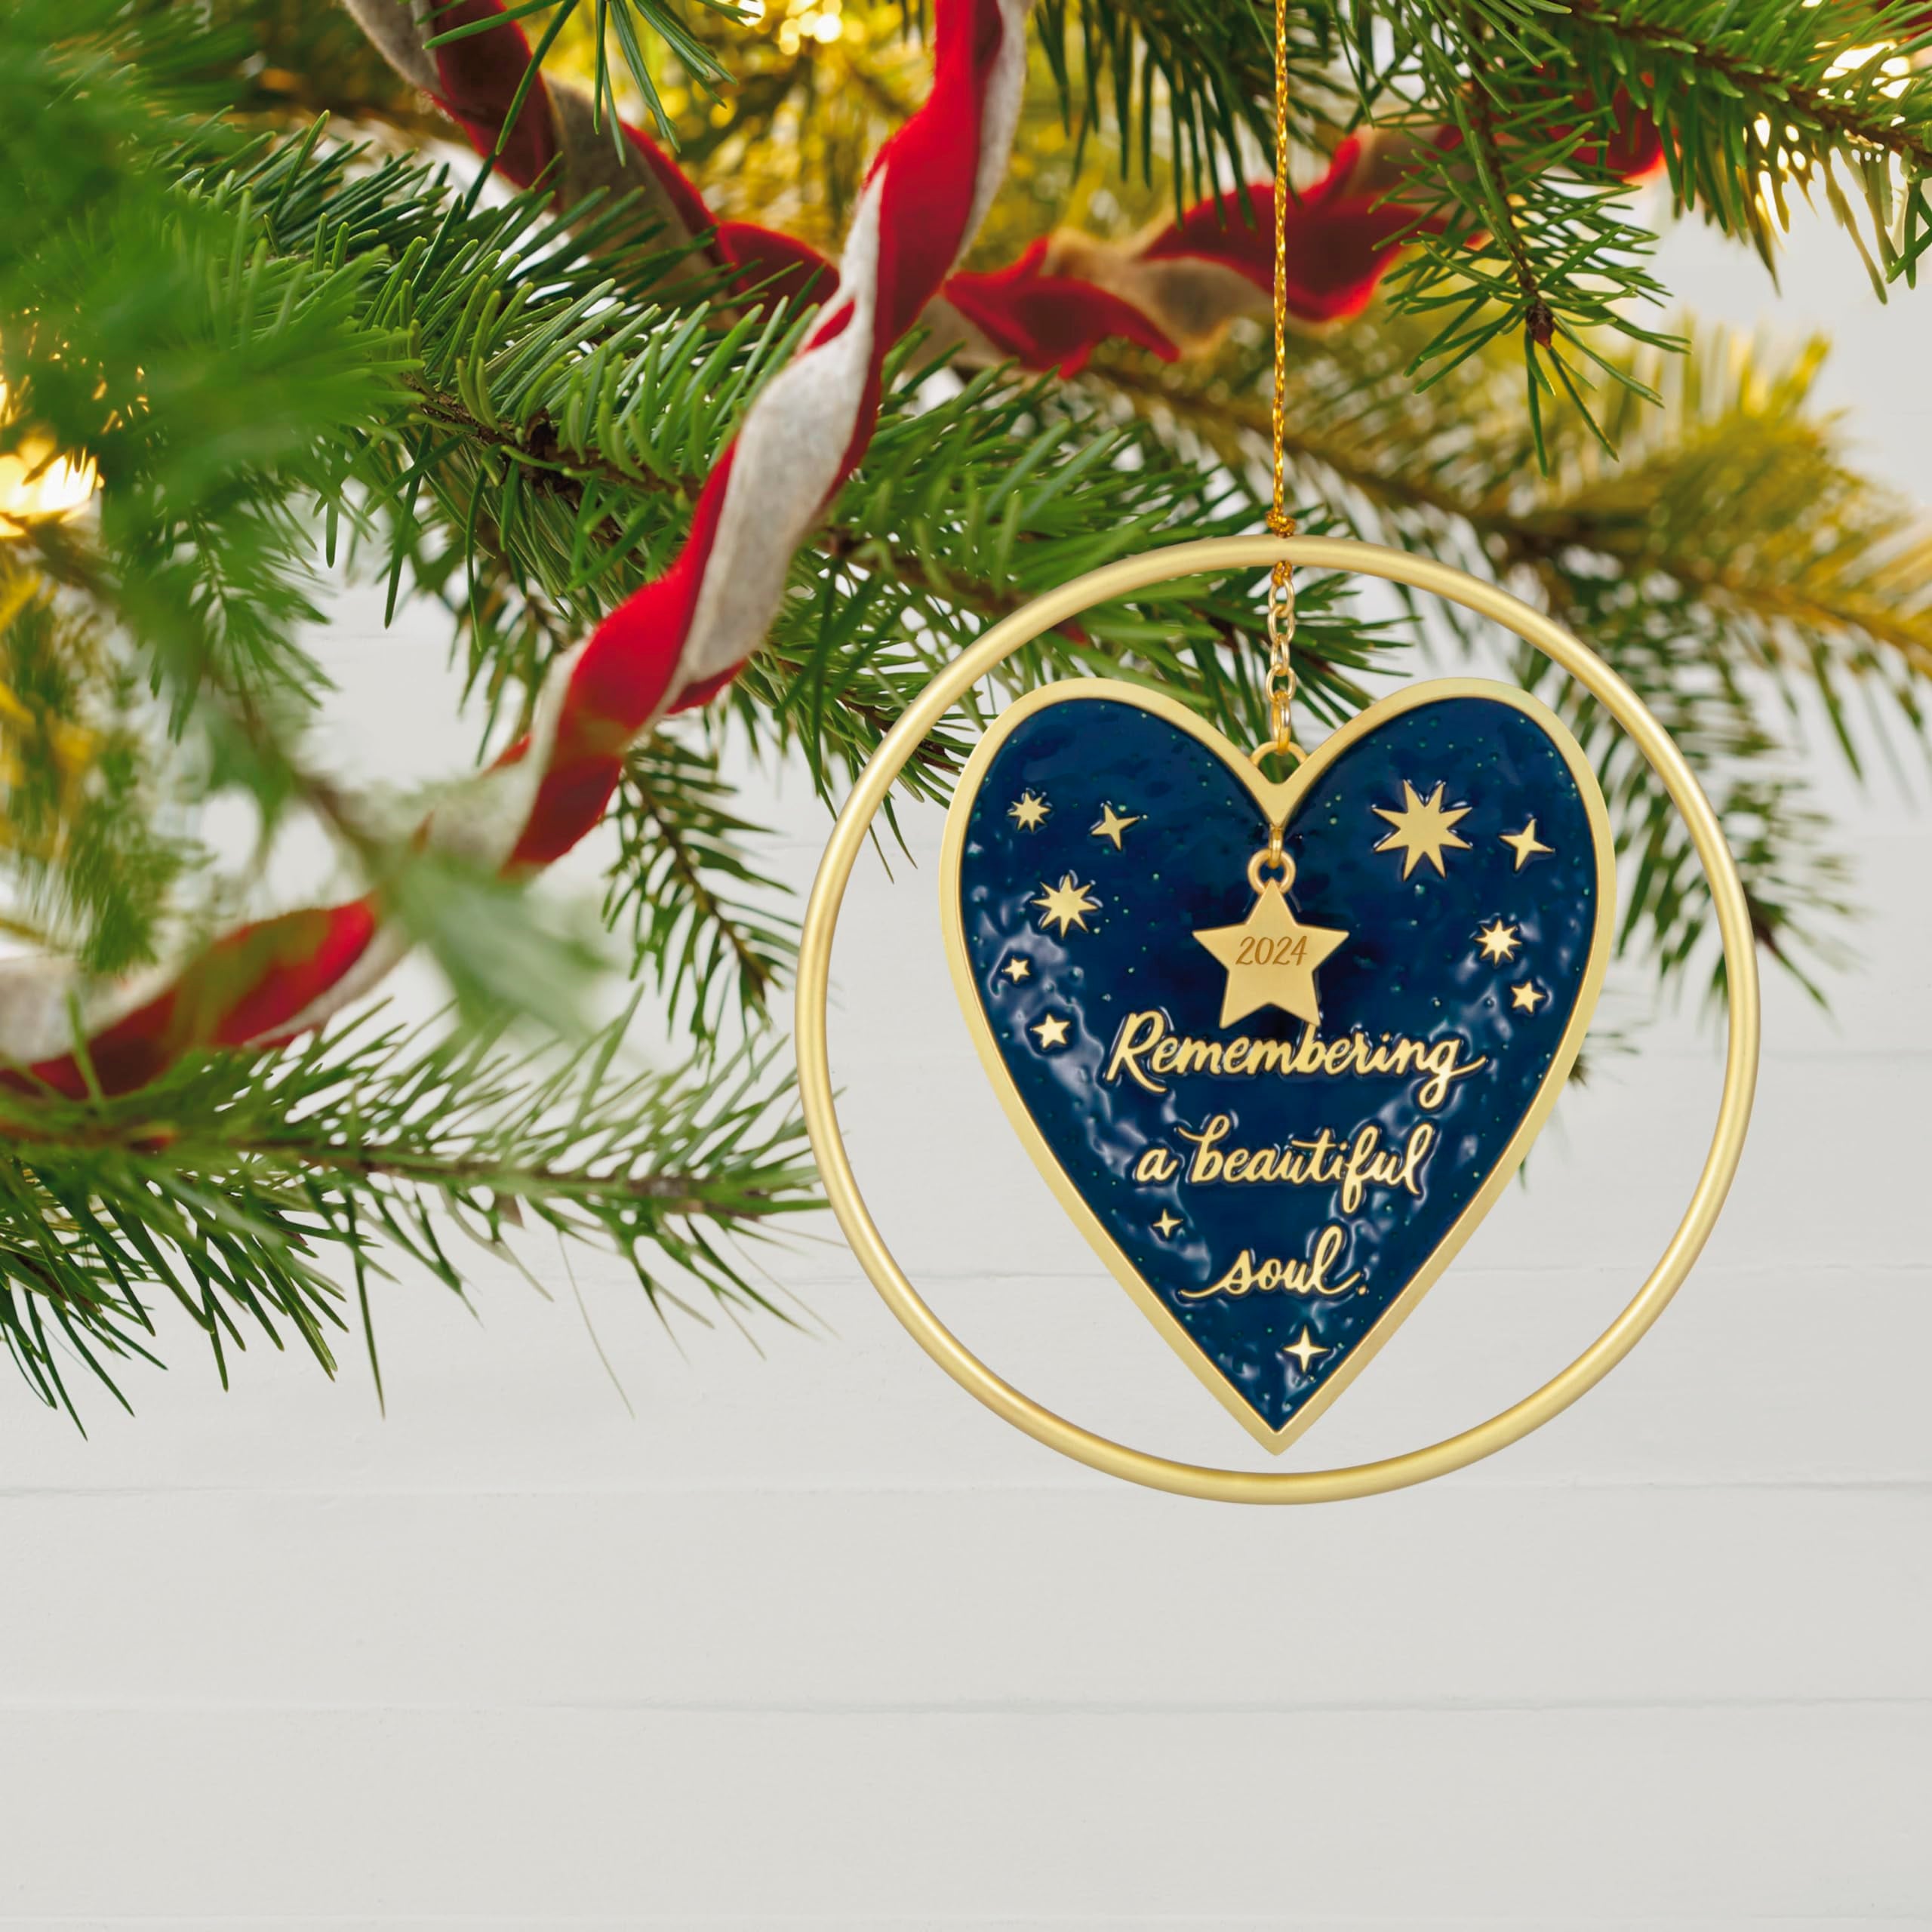 Hallmark Keepsake Christmas Ornament 2024, Remembering a Beautiful Soul, Metal, Remembrance Gift